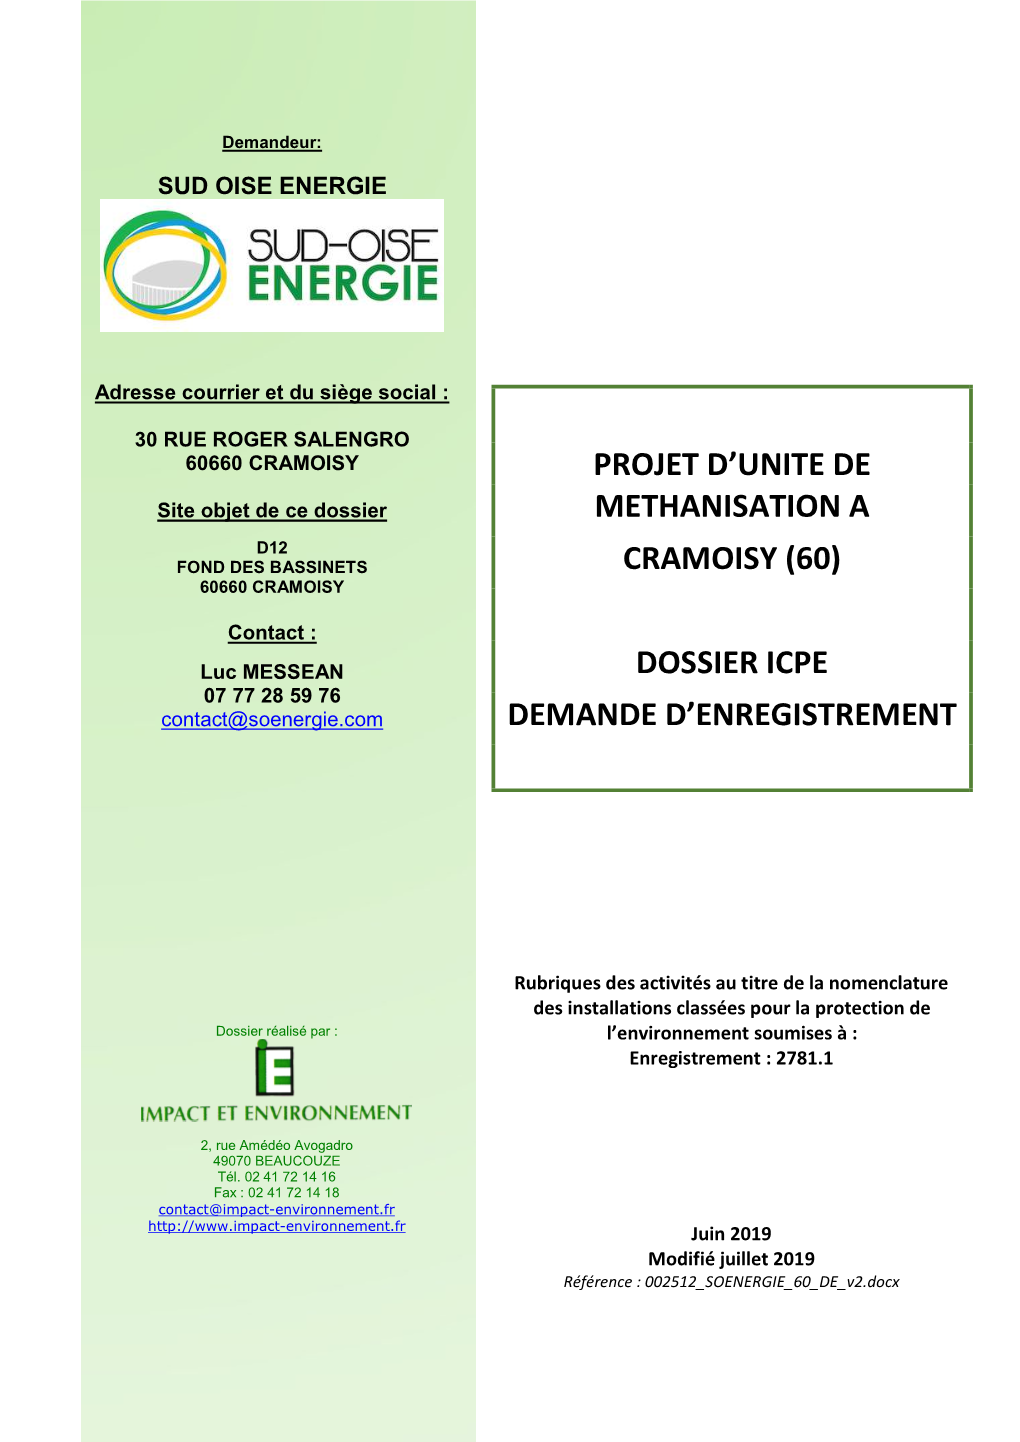 Projet D'unite De Methanisation a Cramoisy (60) Dossier Icpe